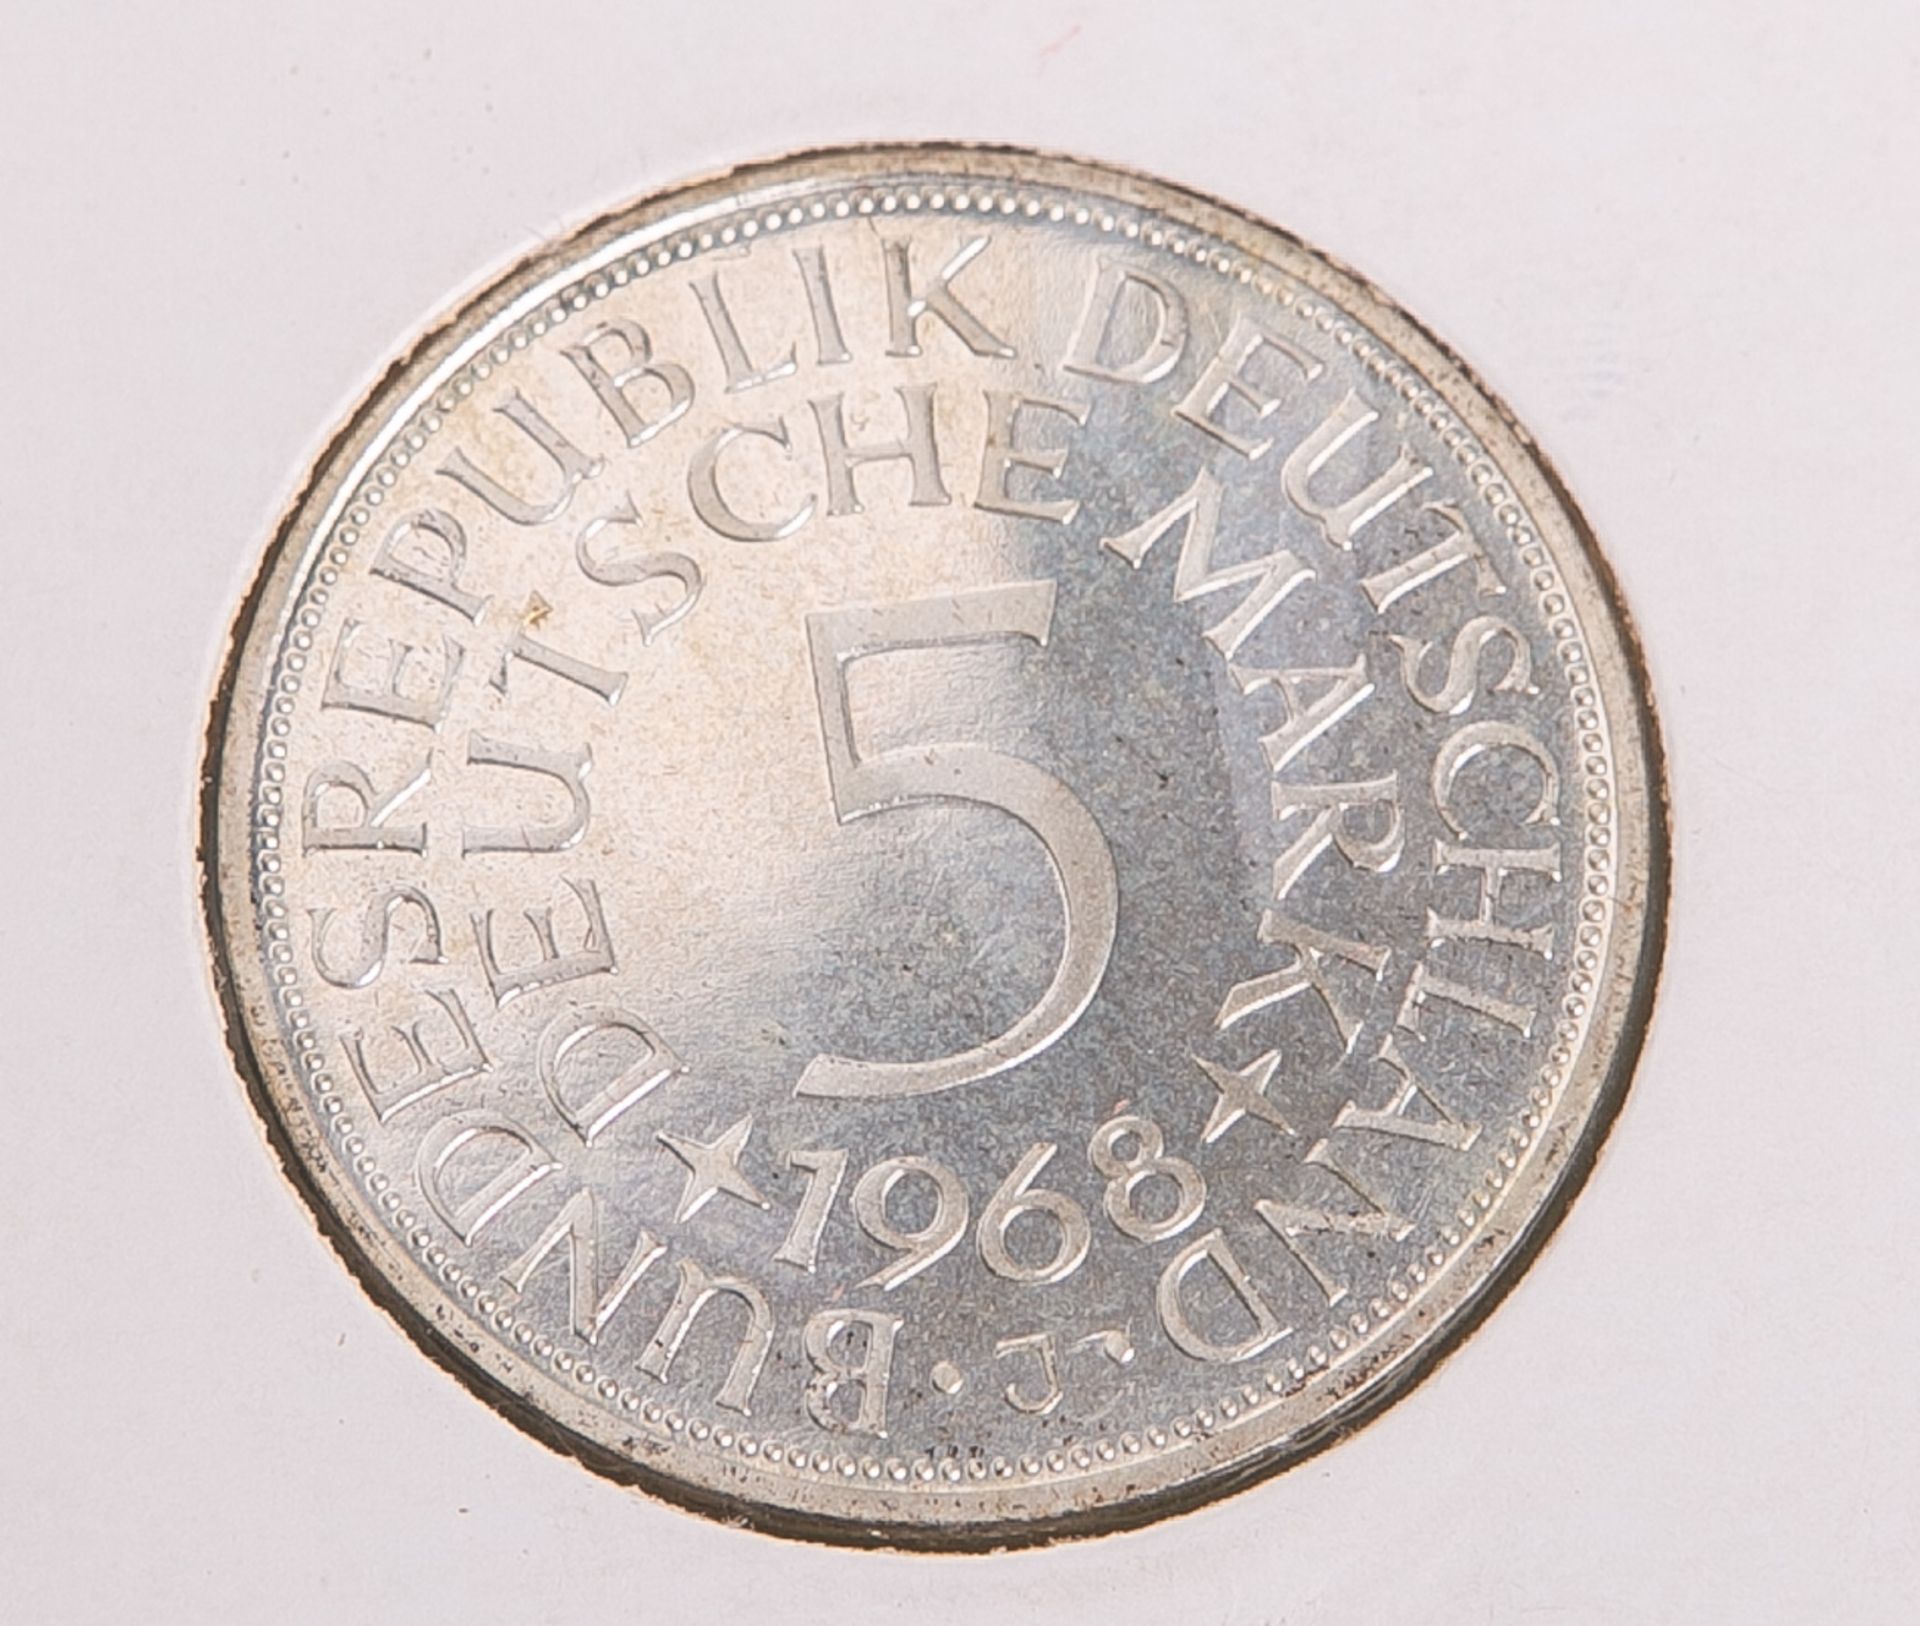 5 DM-Münze "Silberadler" (BRD, 1968), Münzprägestätte: J, eingeschweißt. PP.